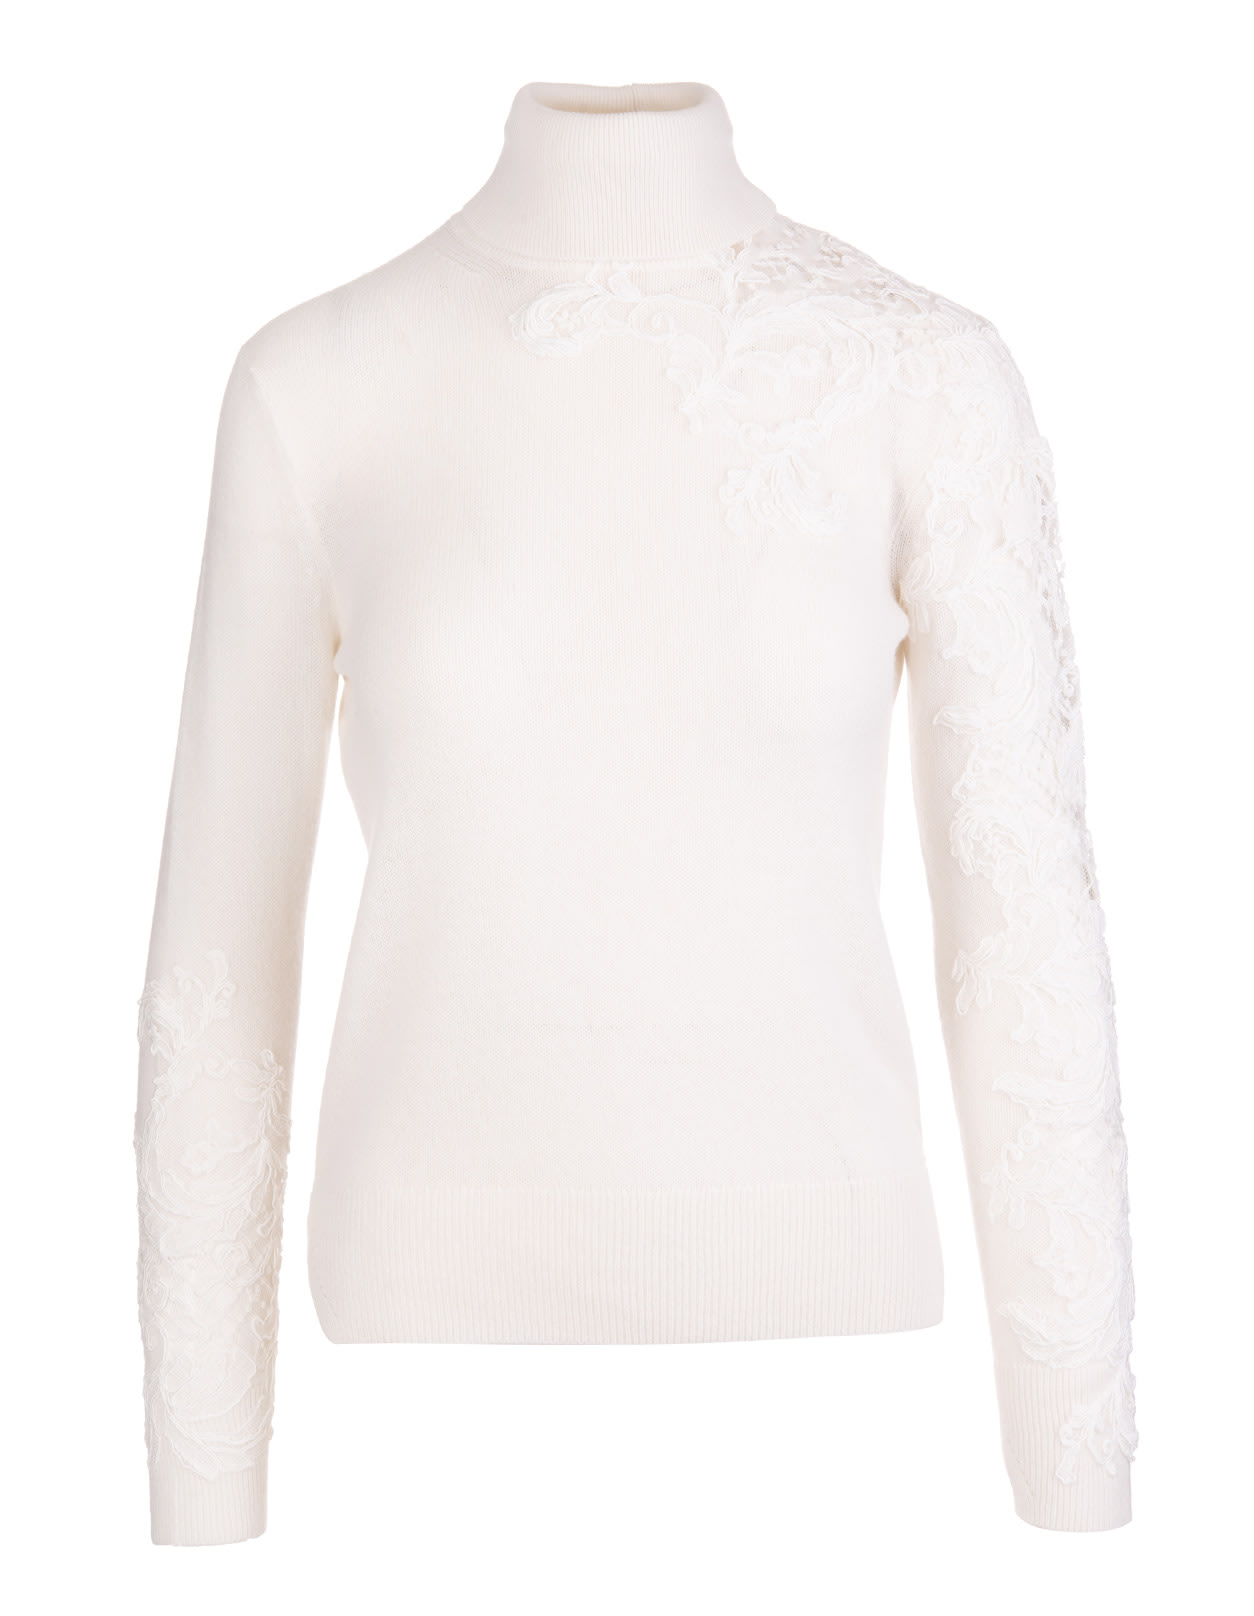 Ermanno Scervino White Turtleneck Sweater With Lace Cutouts